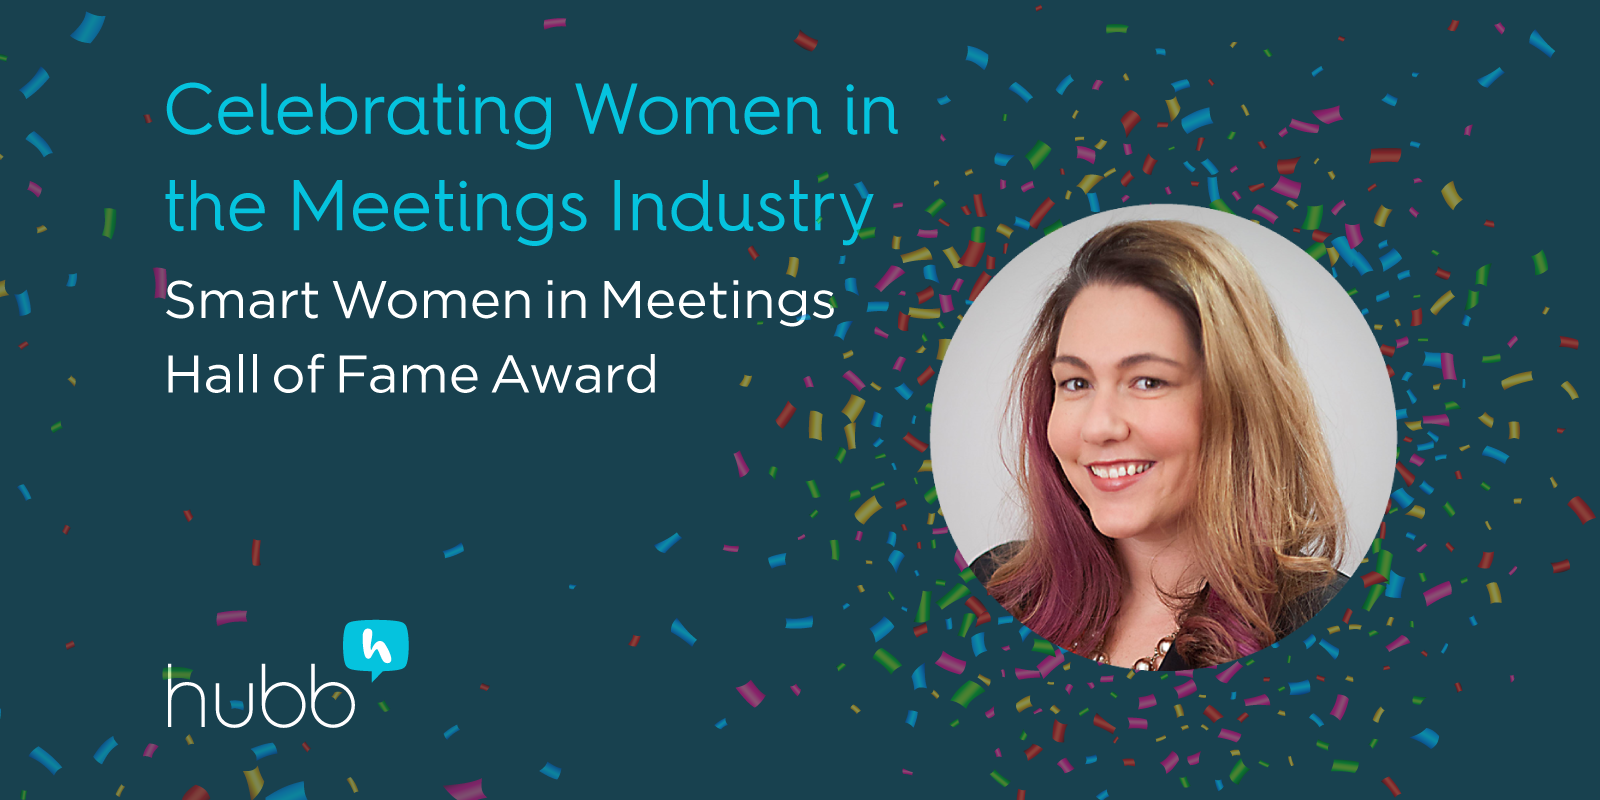 CelebratingWomen-in-MeetingsIndustry-Social